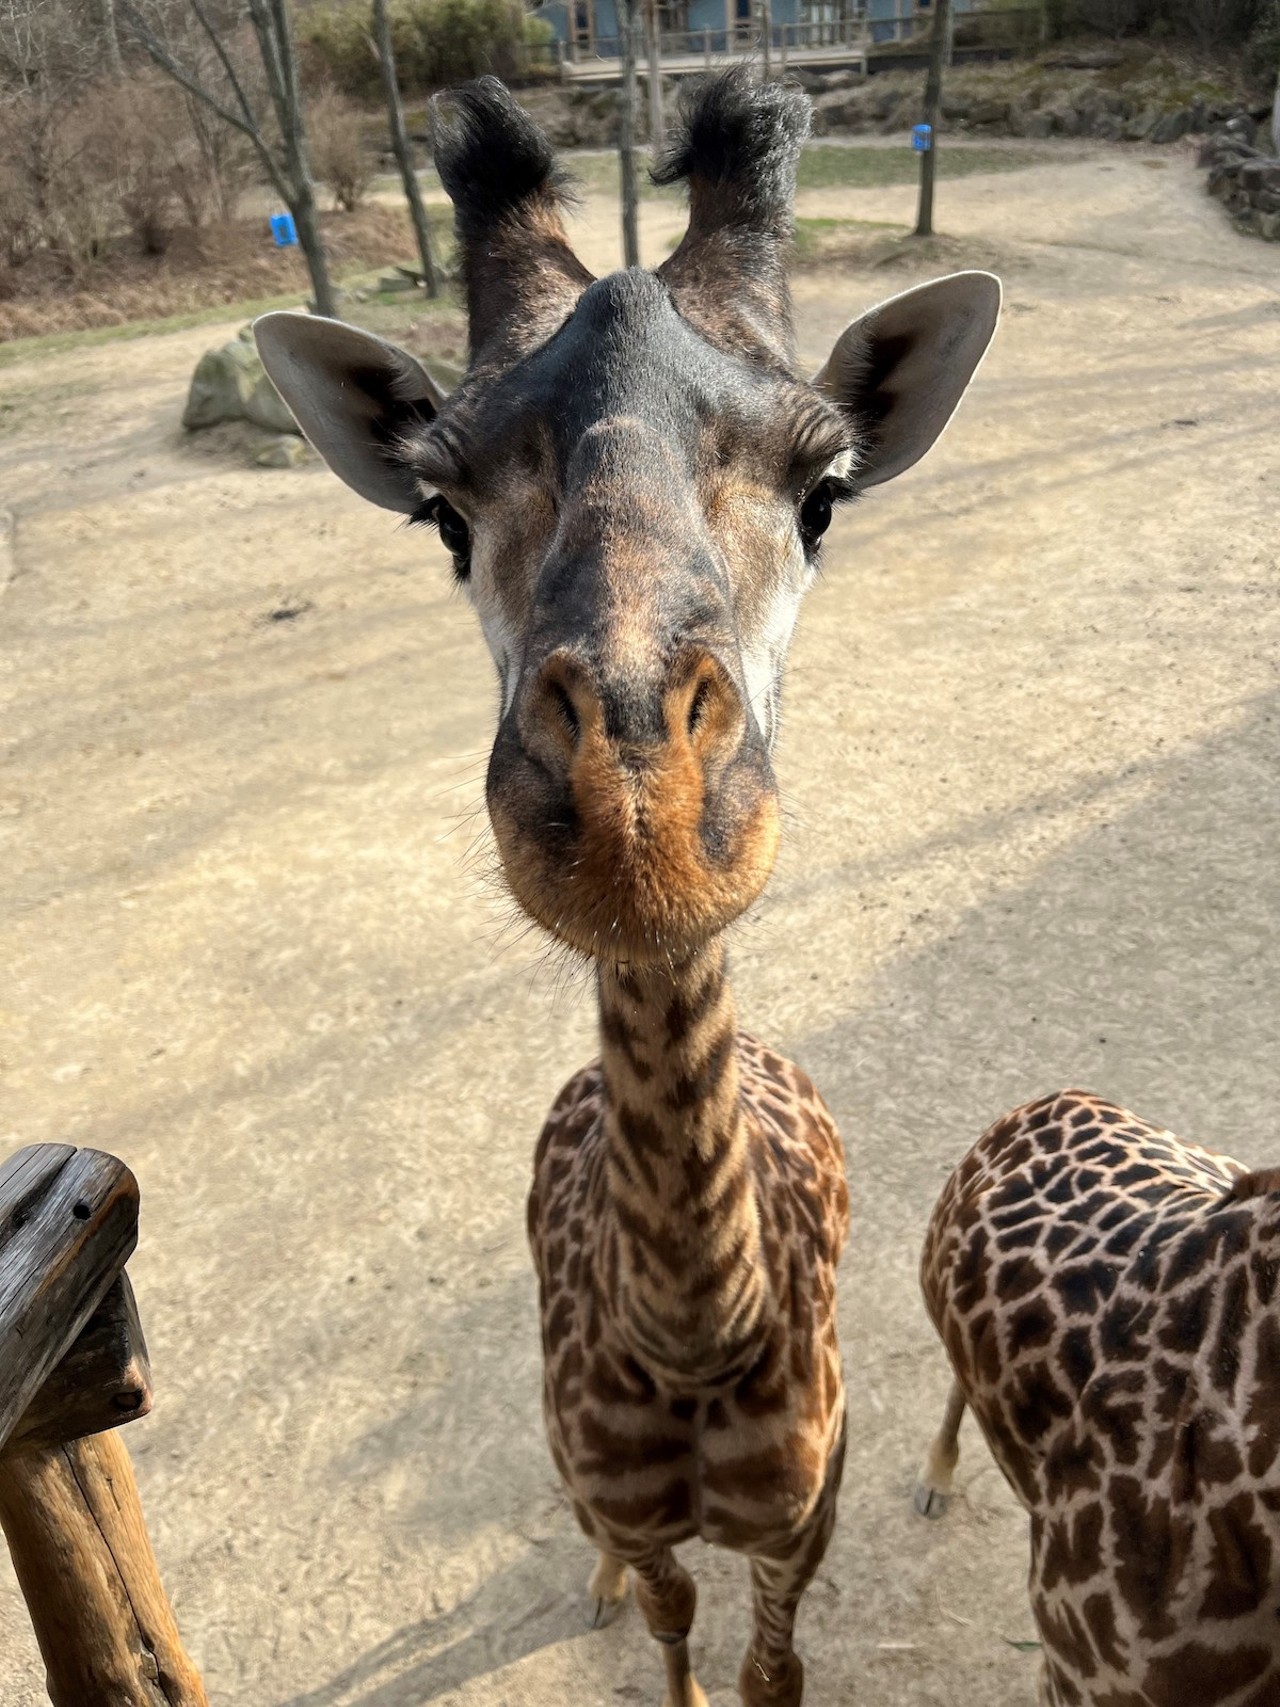 Fenn the baby giraffe